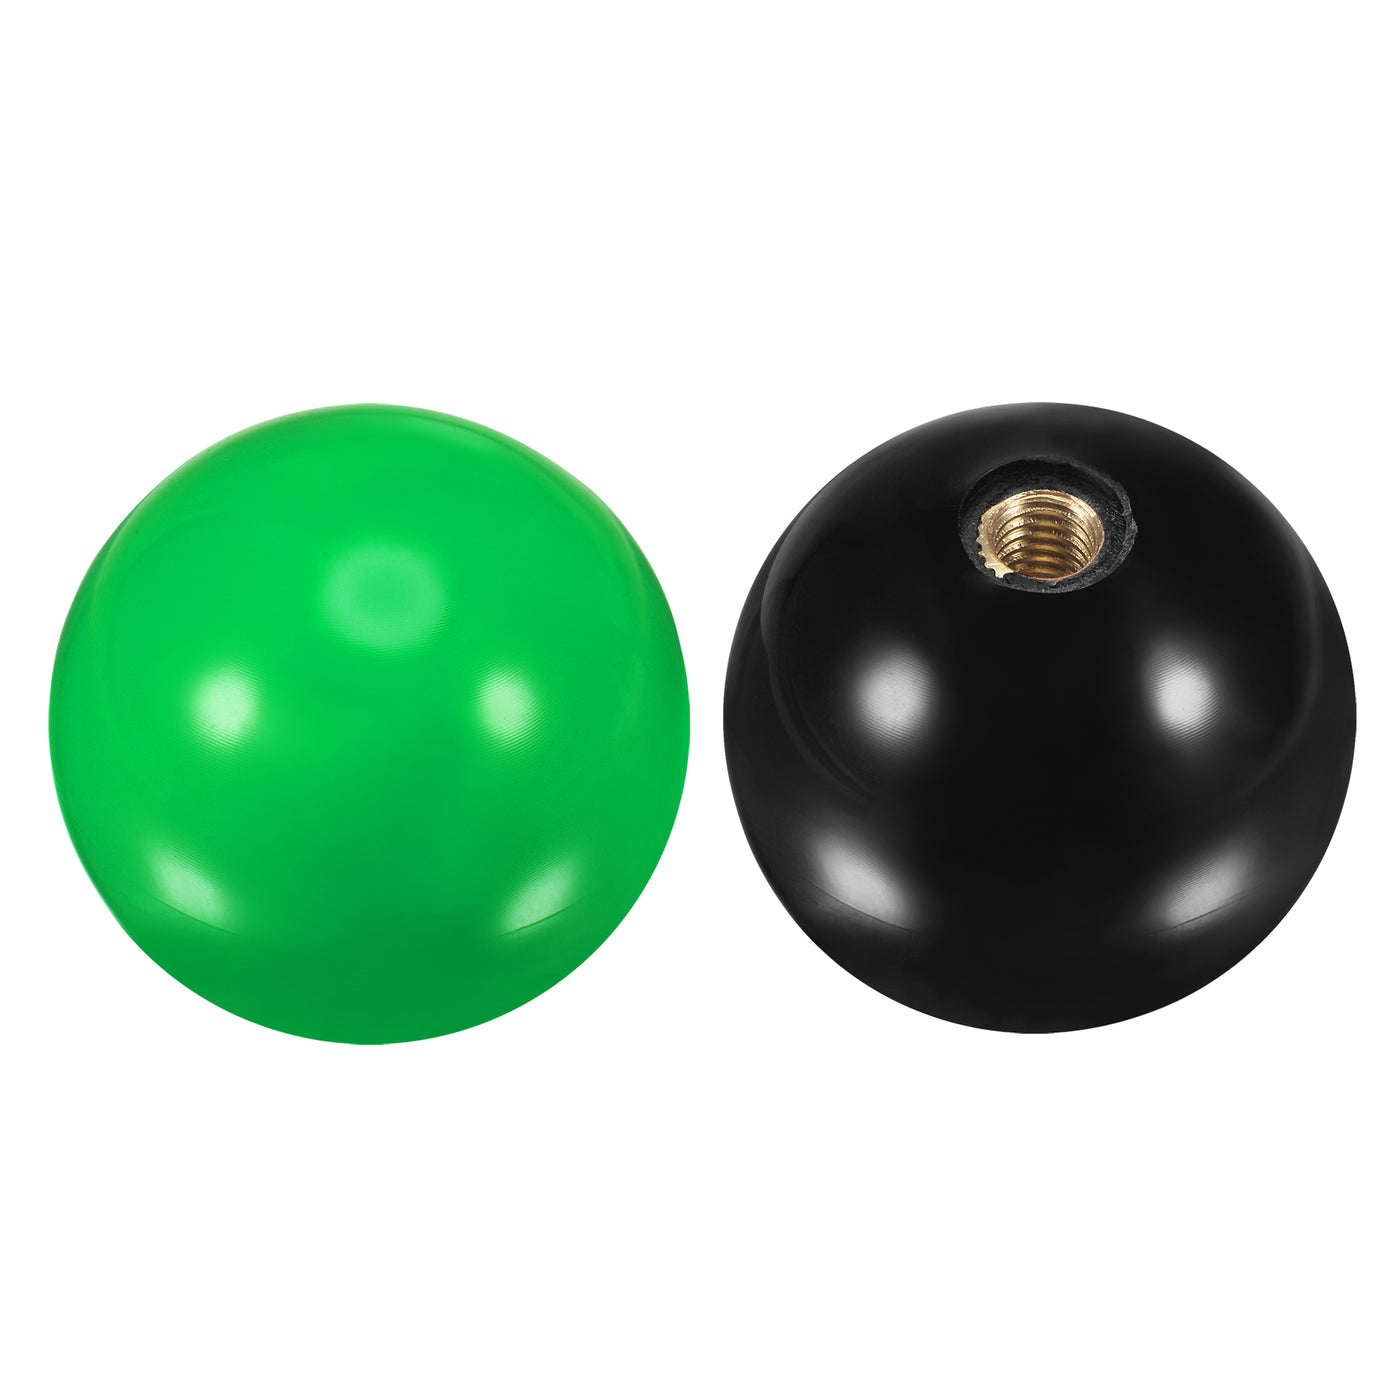 uxcell Uxcell Joystick Head Rocker Ball Top Handle Arcade Game Replacement Green/Black